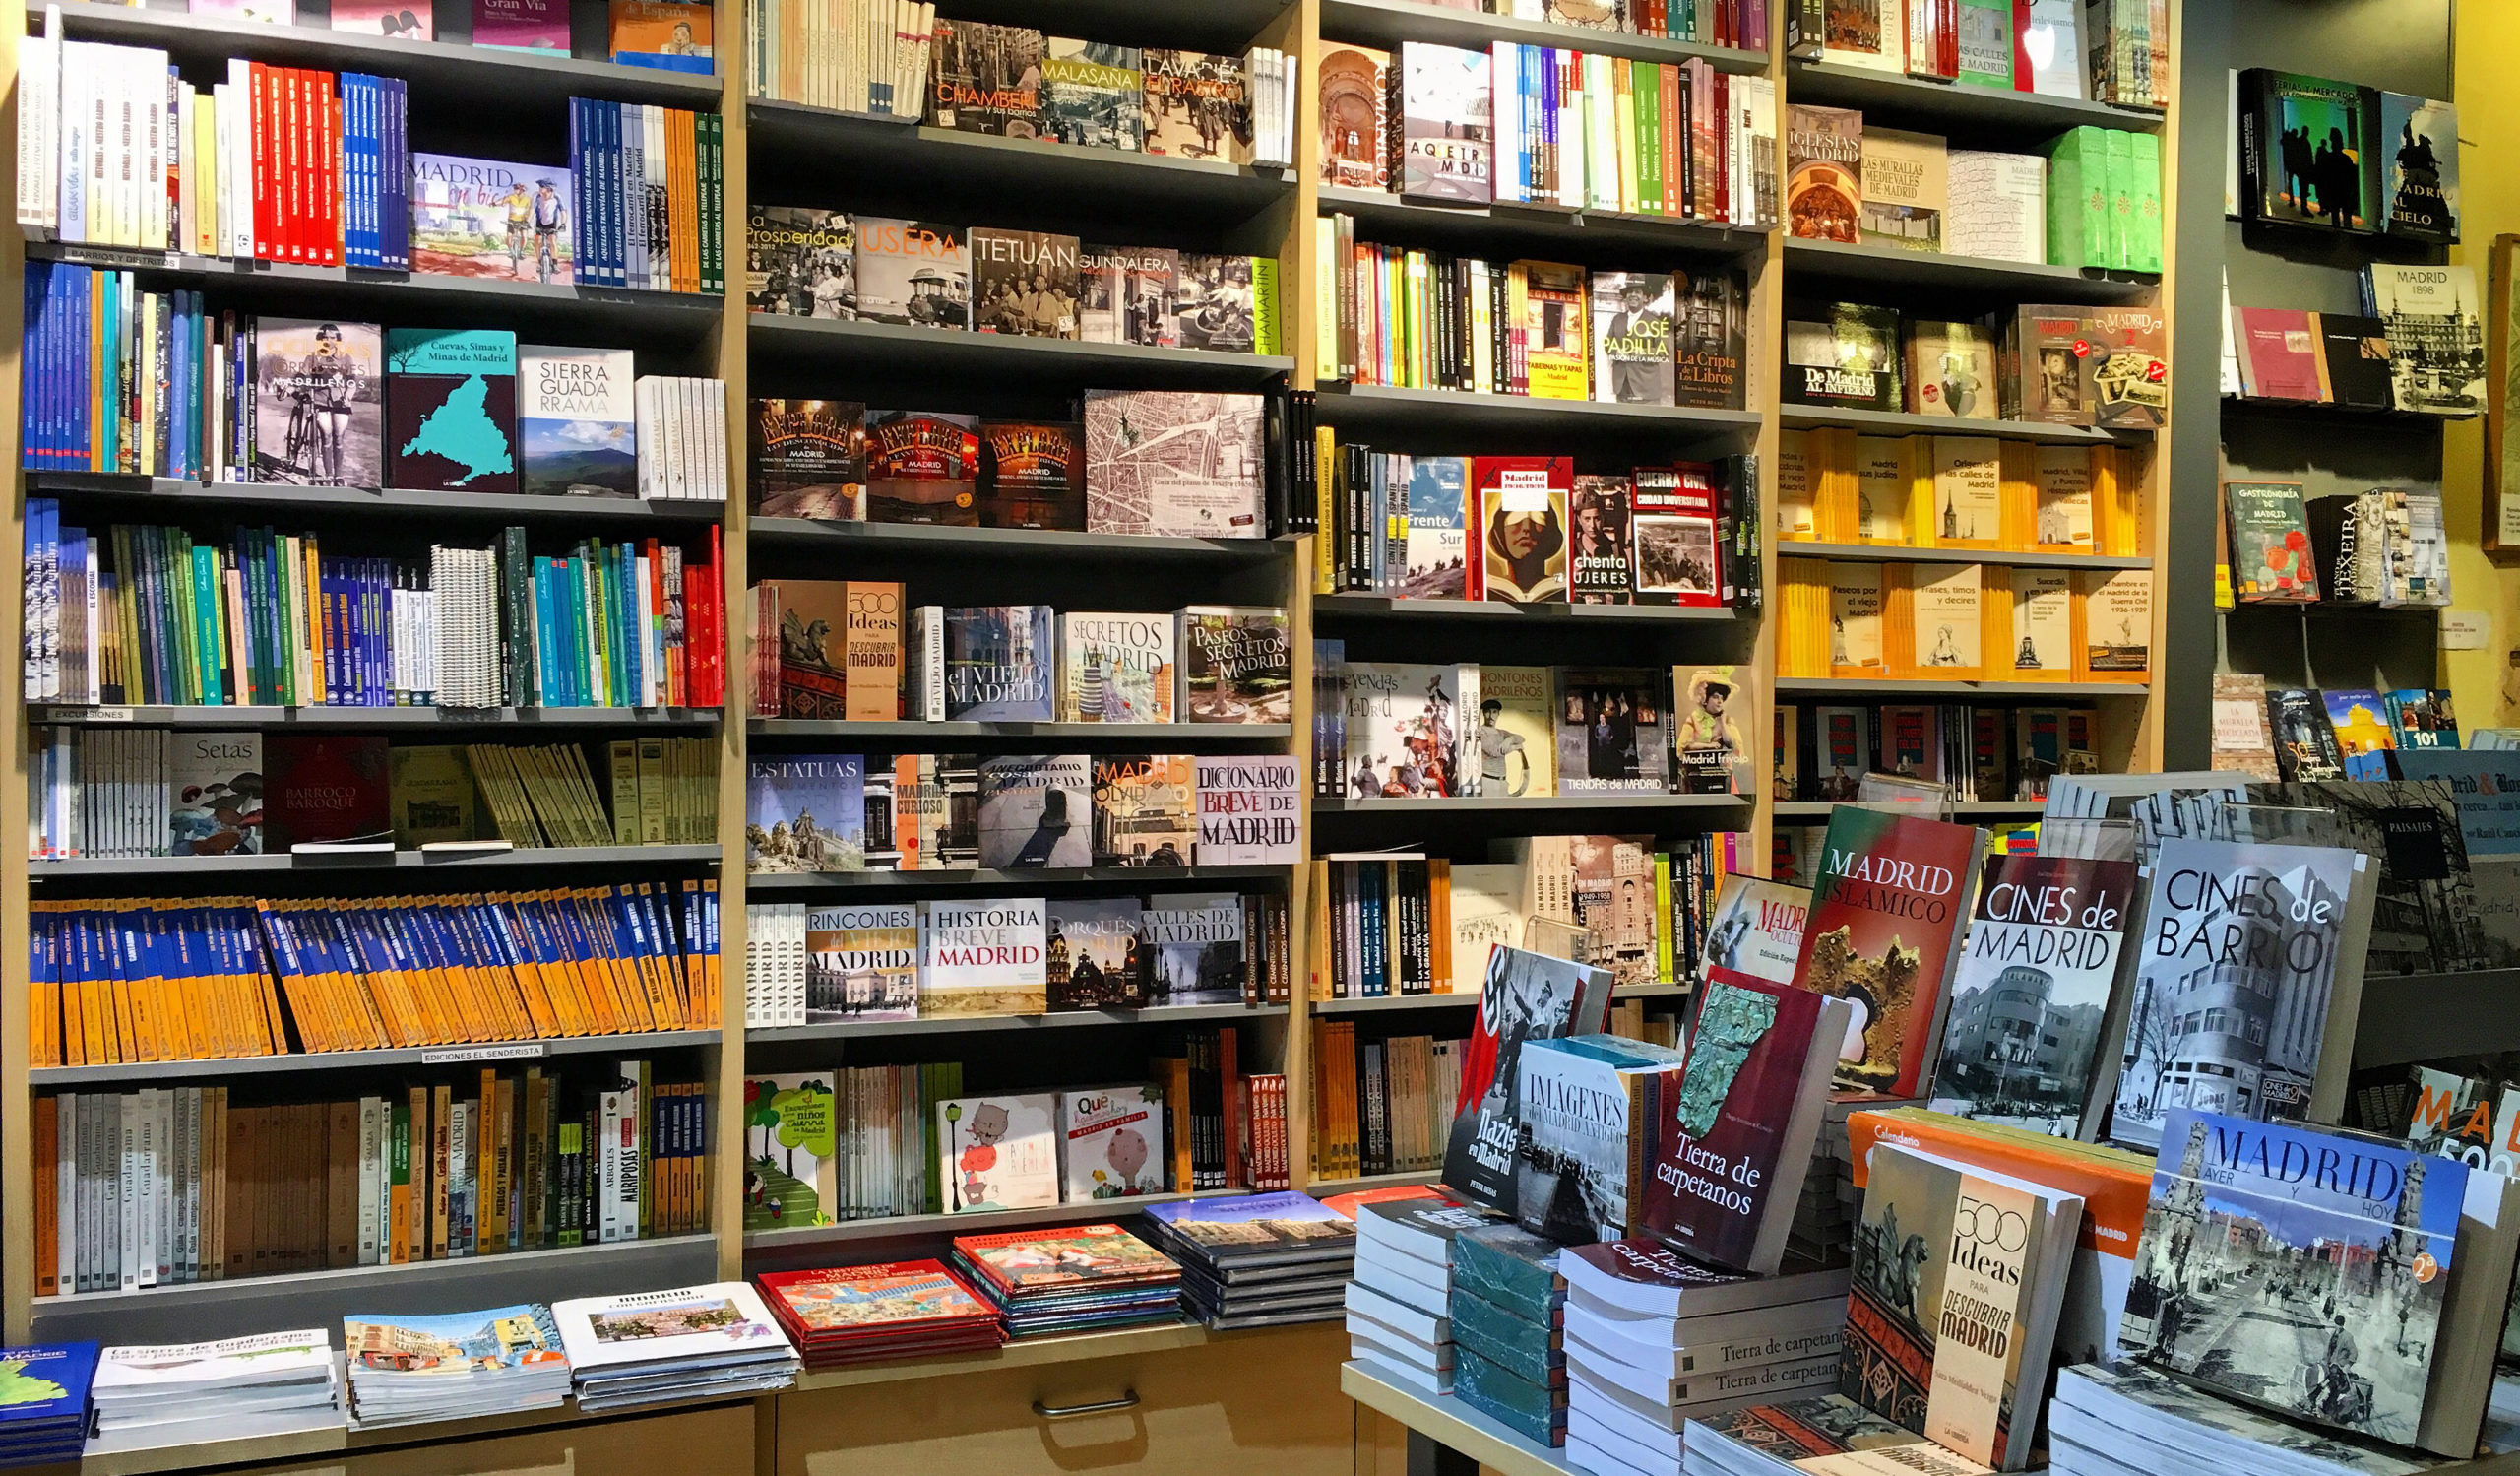 La Libreria, Madrid